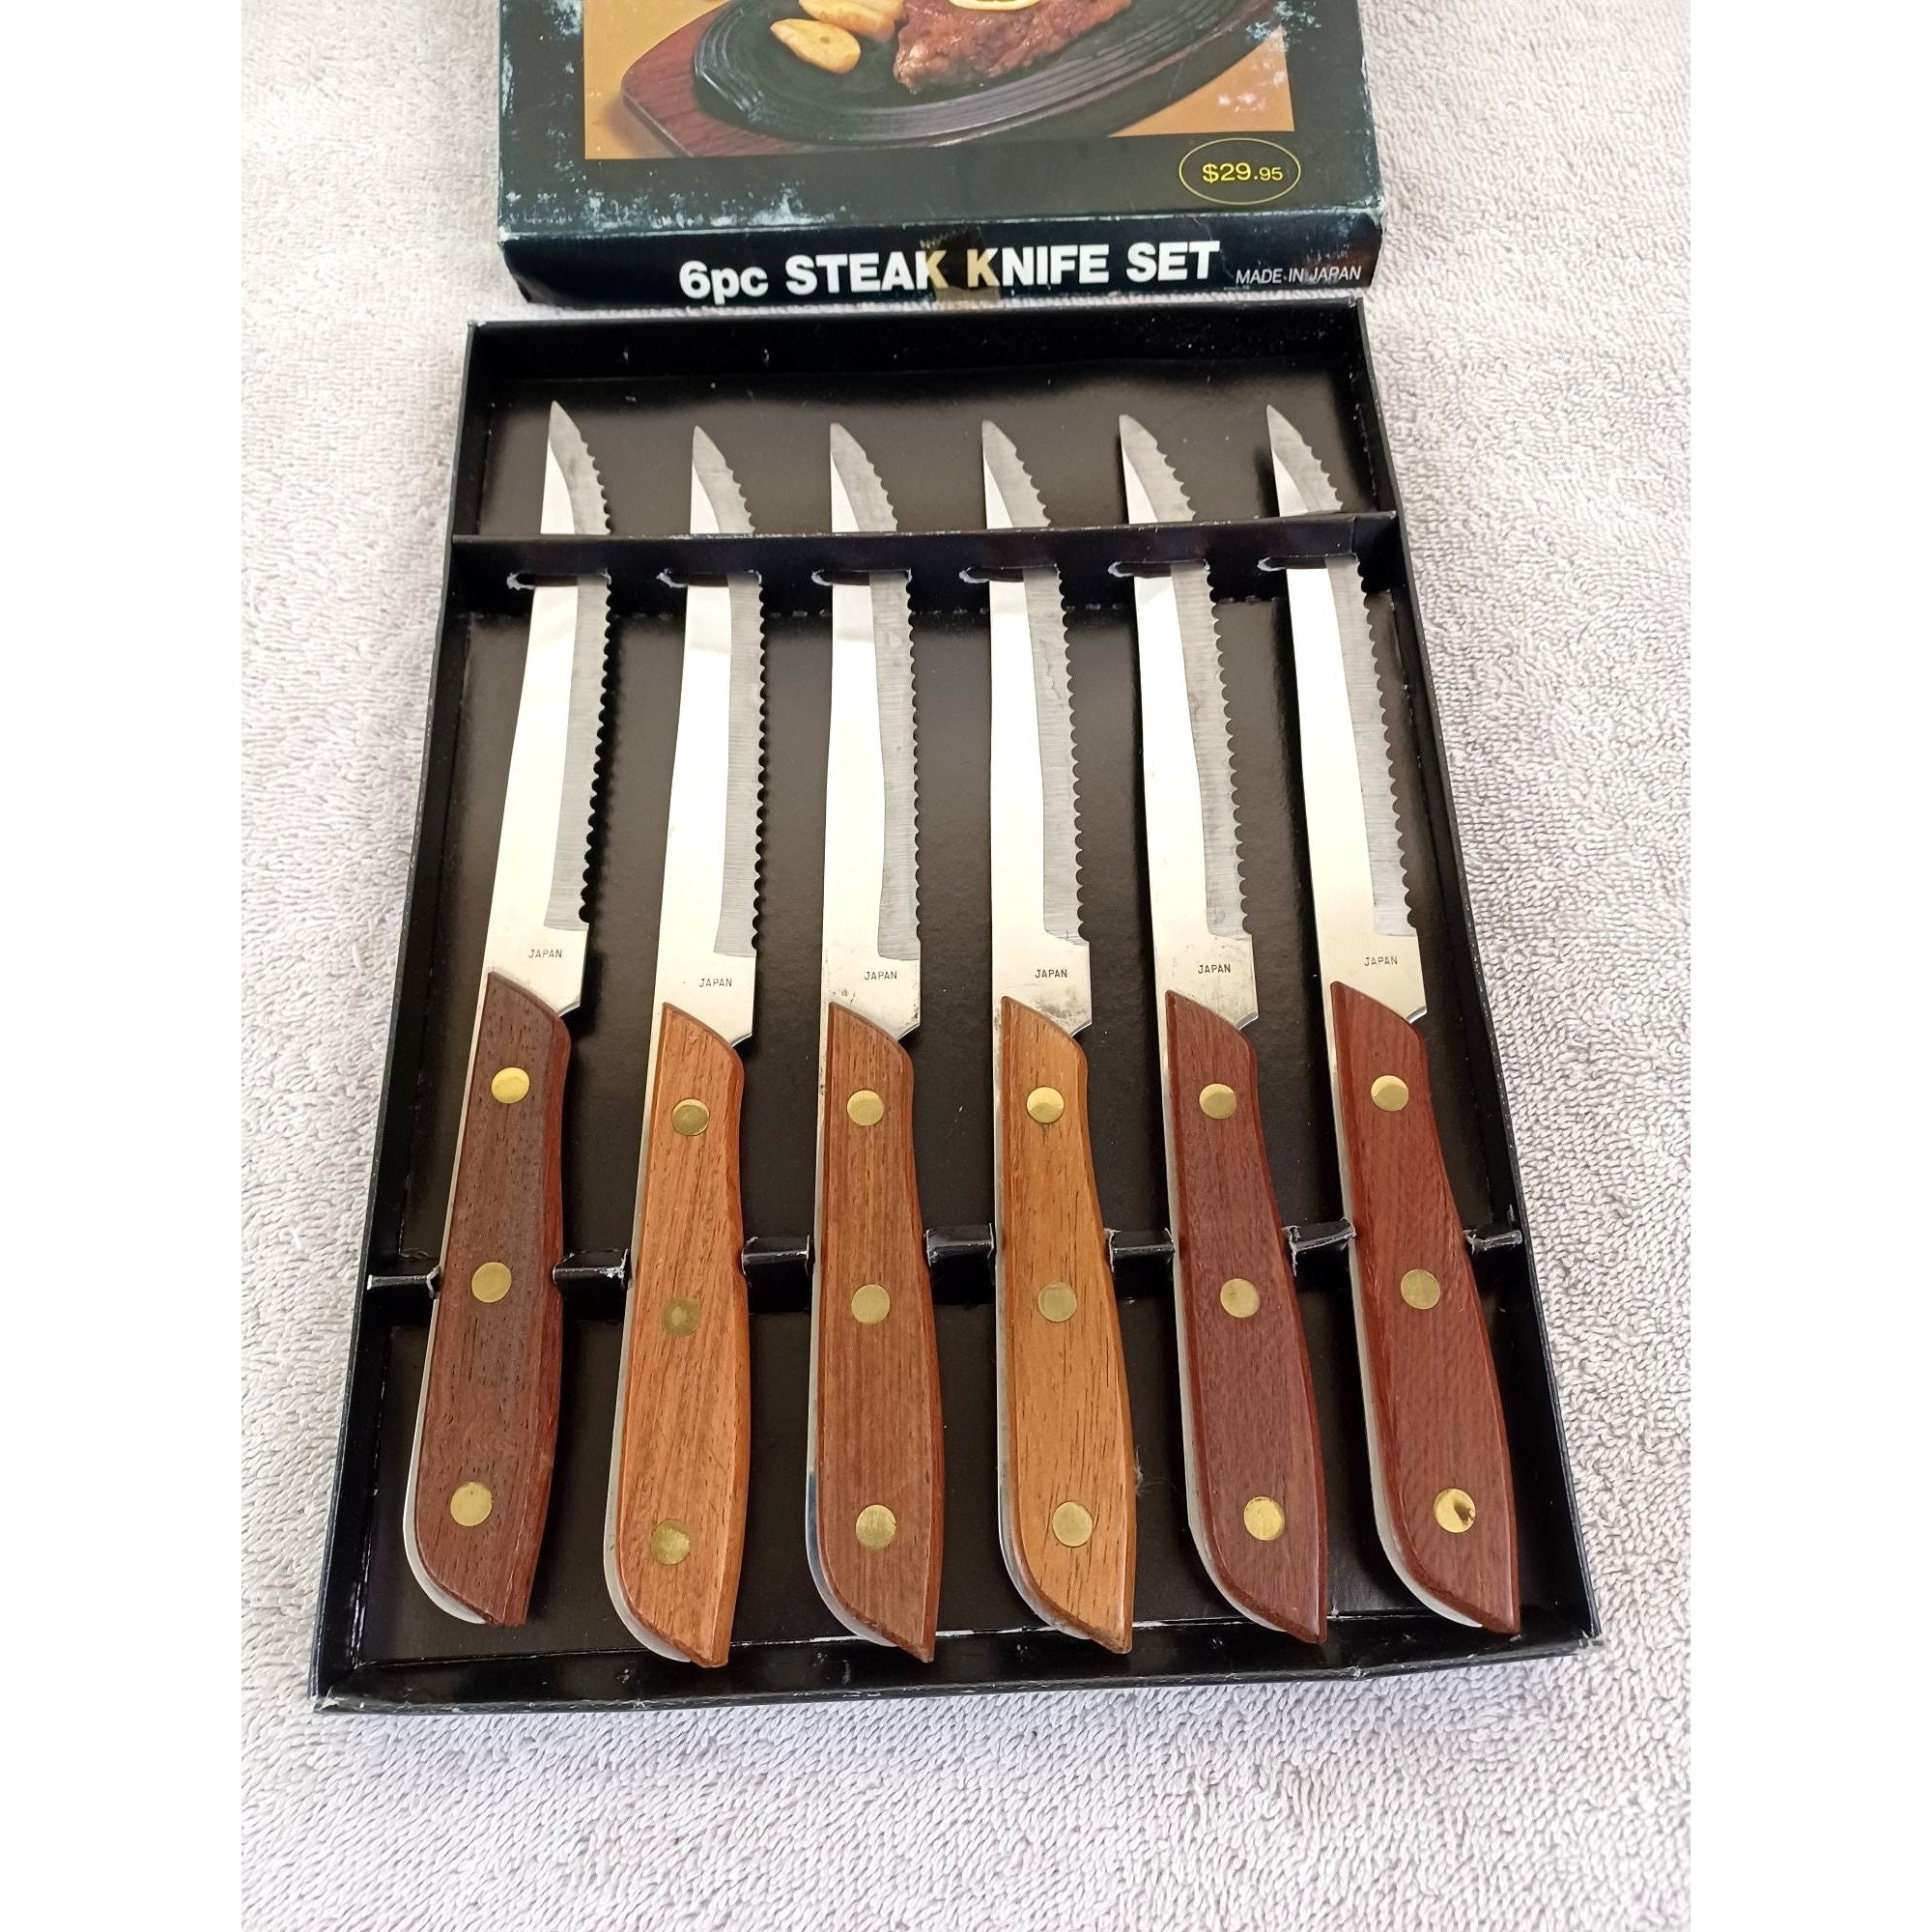 Viking 6-Piece Steak Knife Set